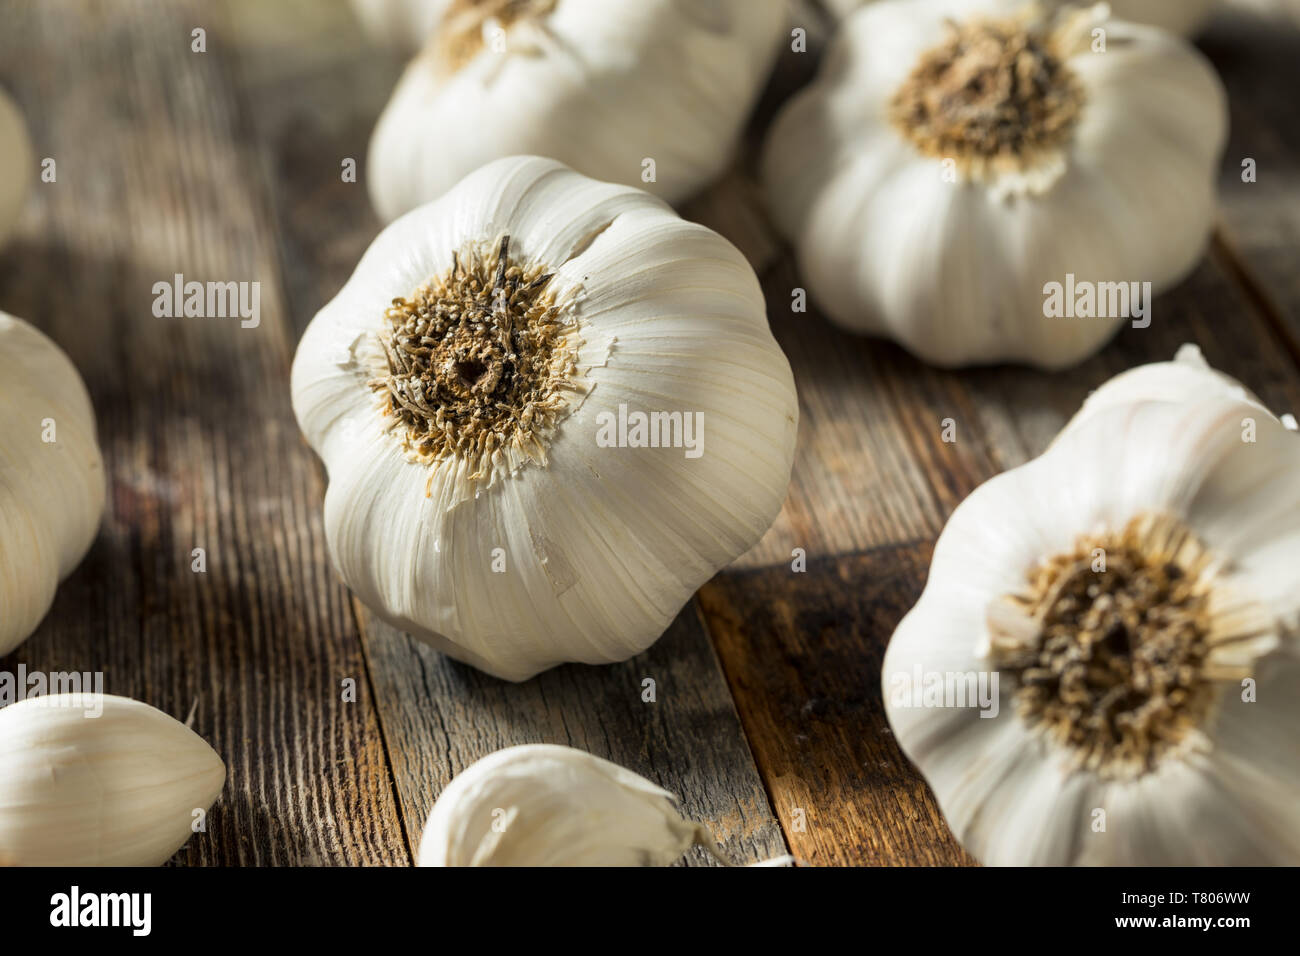 Raw Organic Garlic Bulbs Ready to Cook With Stock Photo